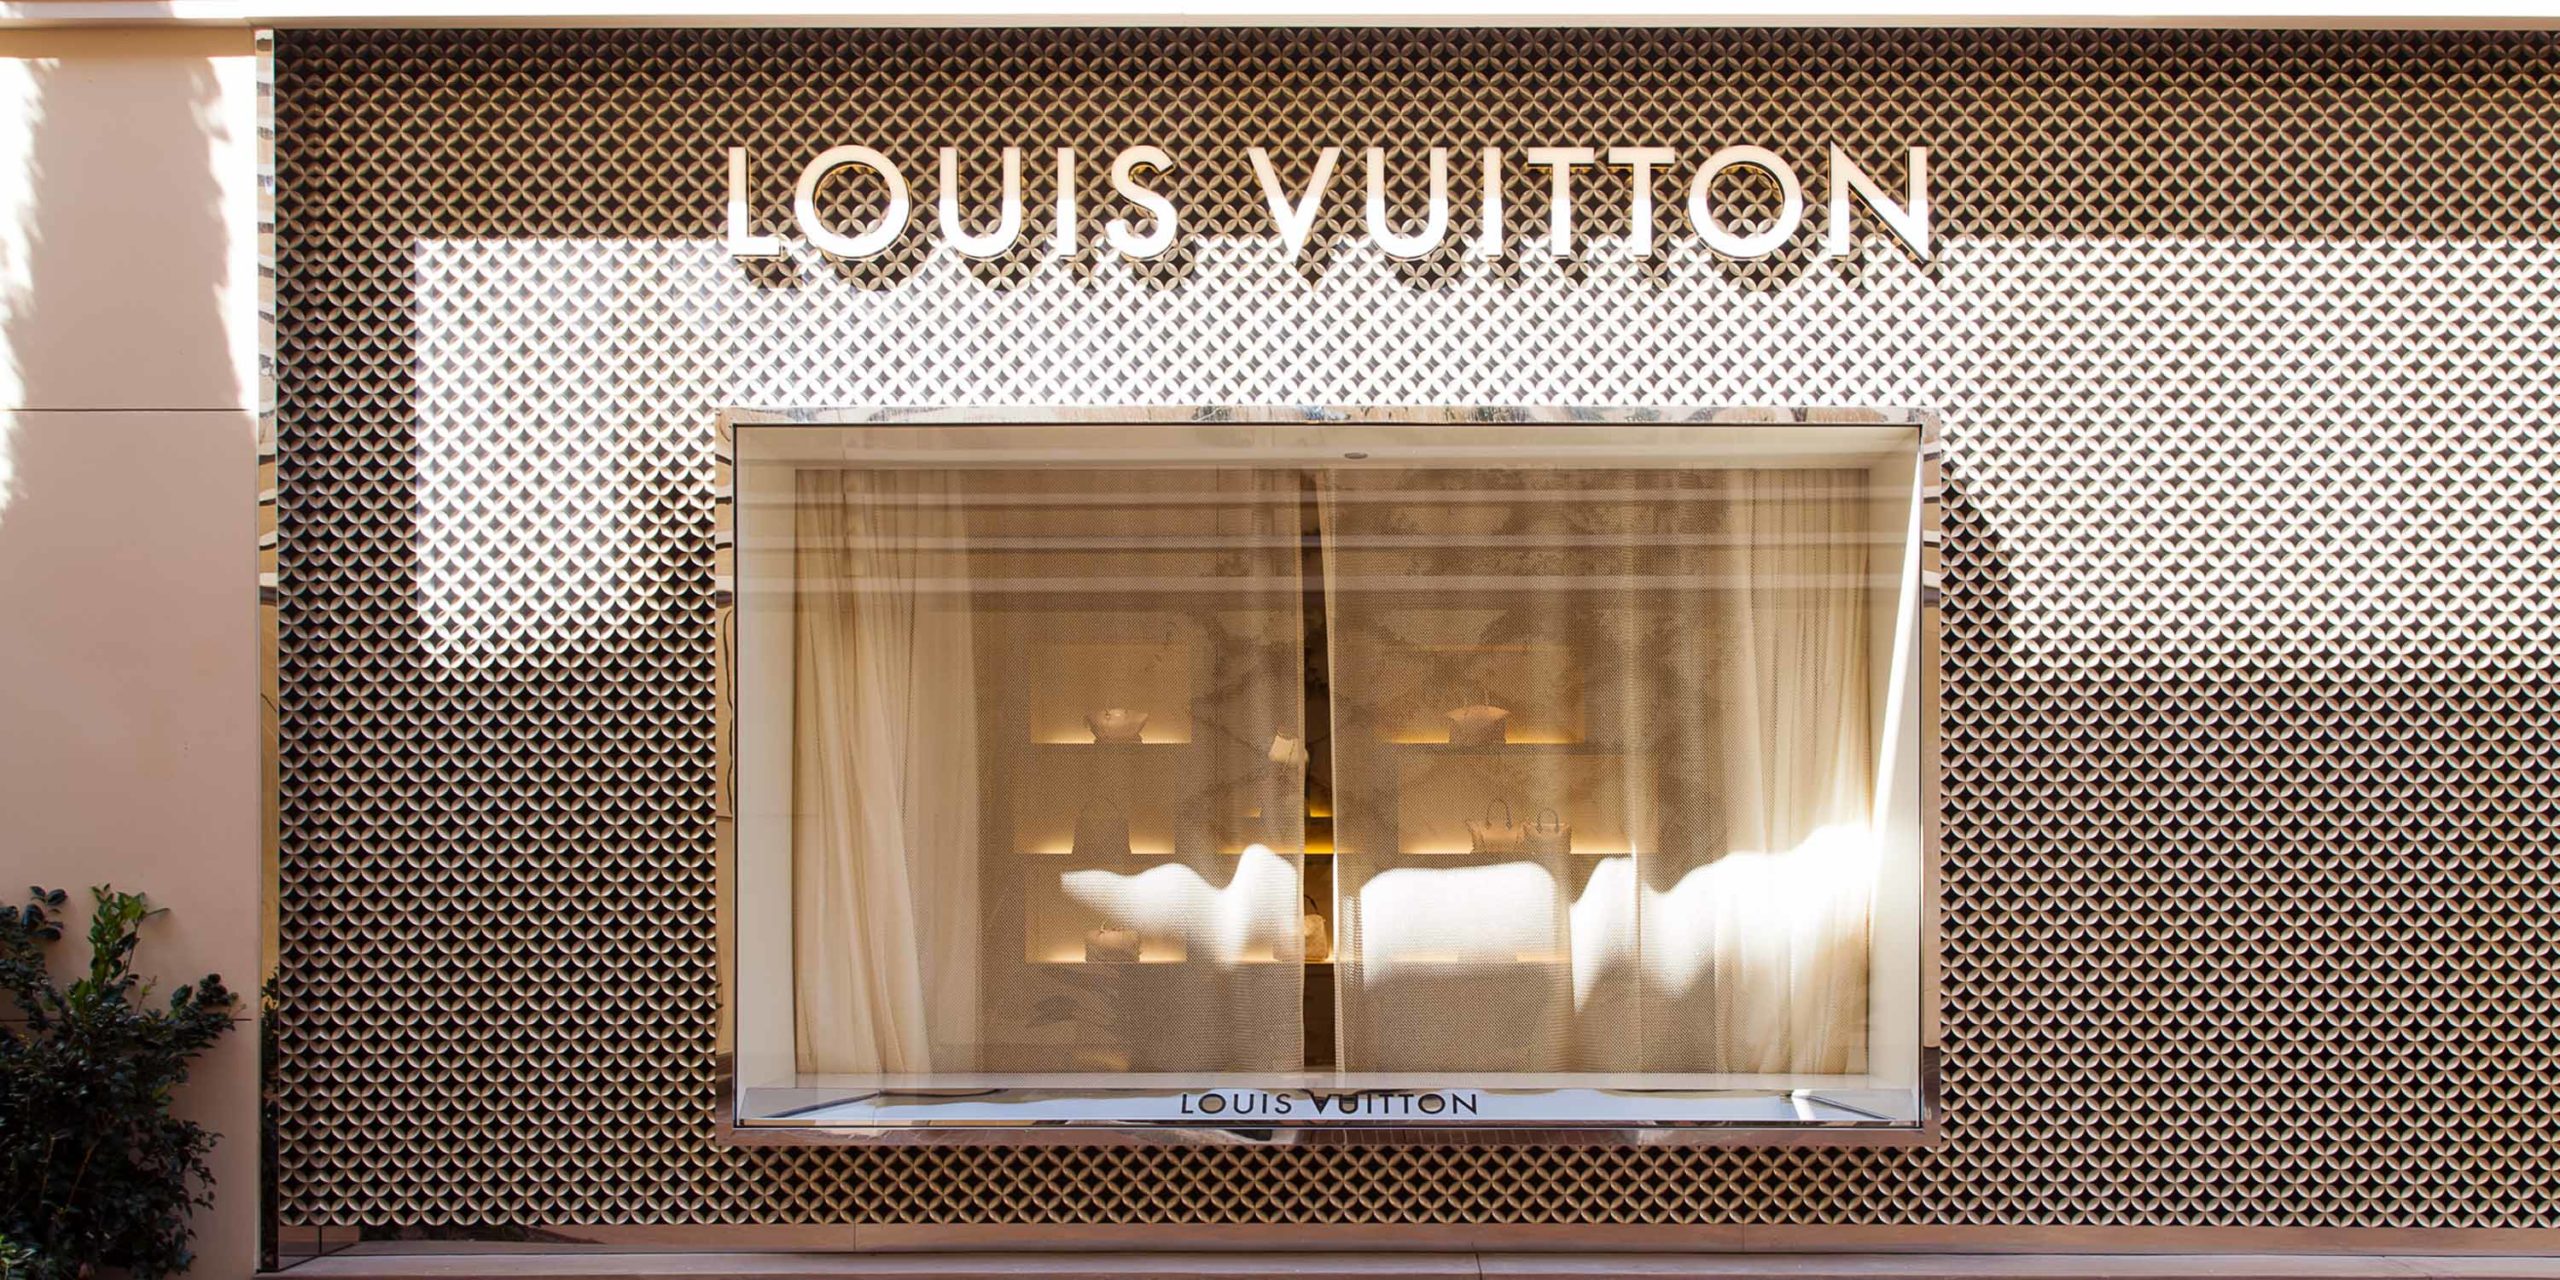 Louis Vuitton Newport Beach Fashion Island Neiman Marcus, 601